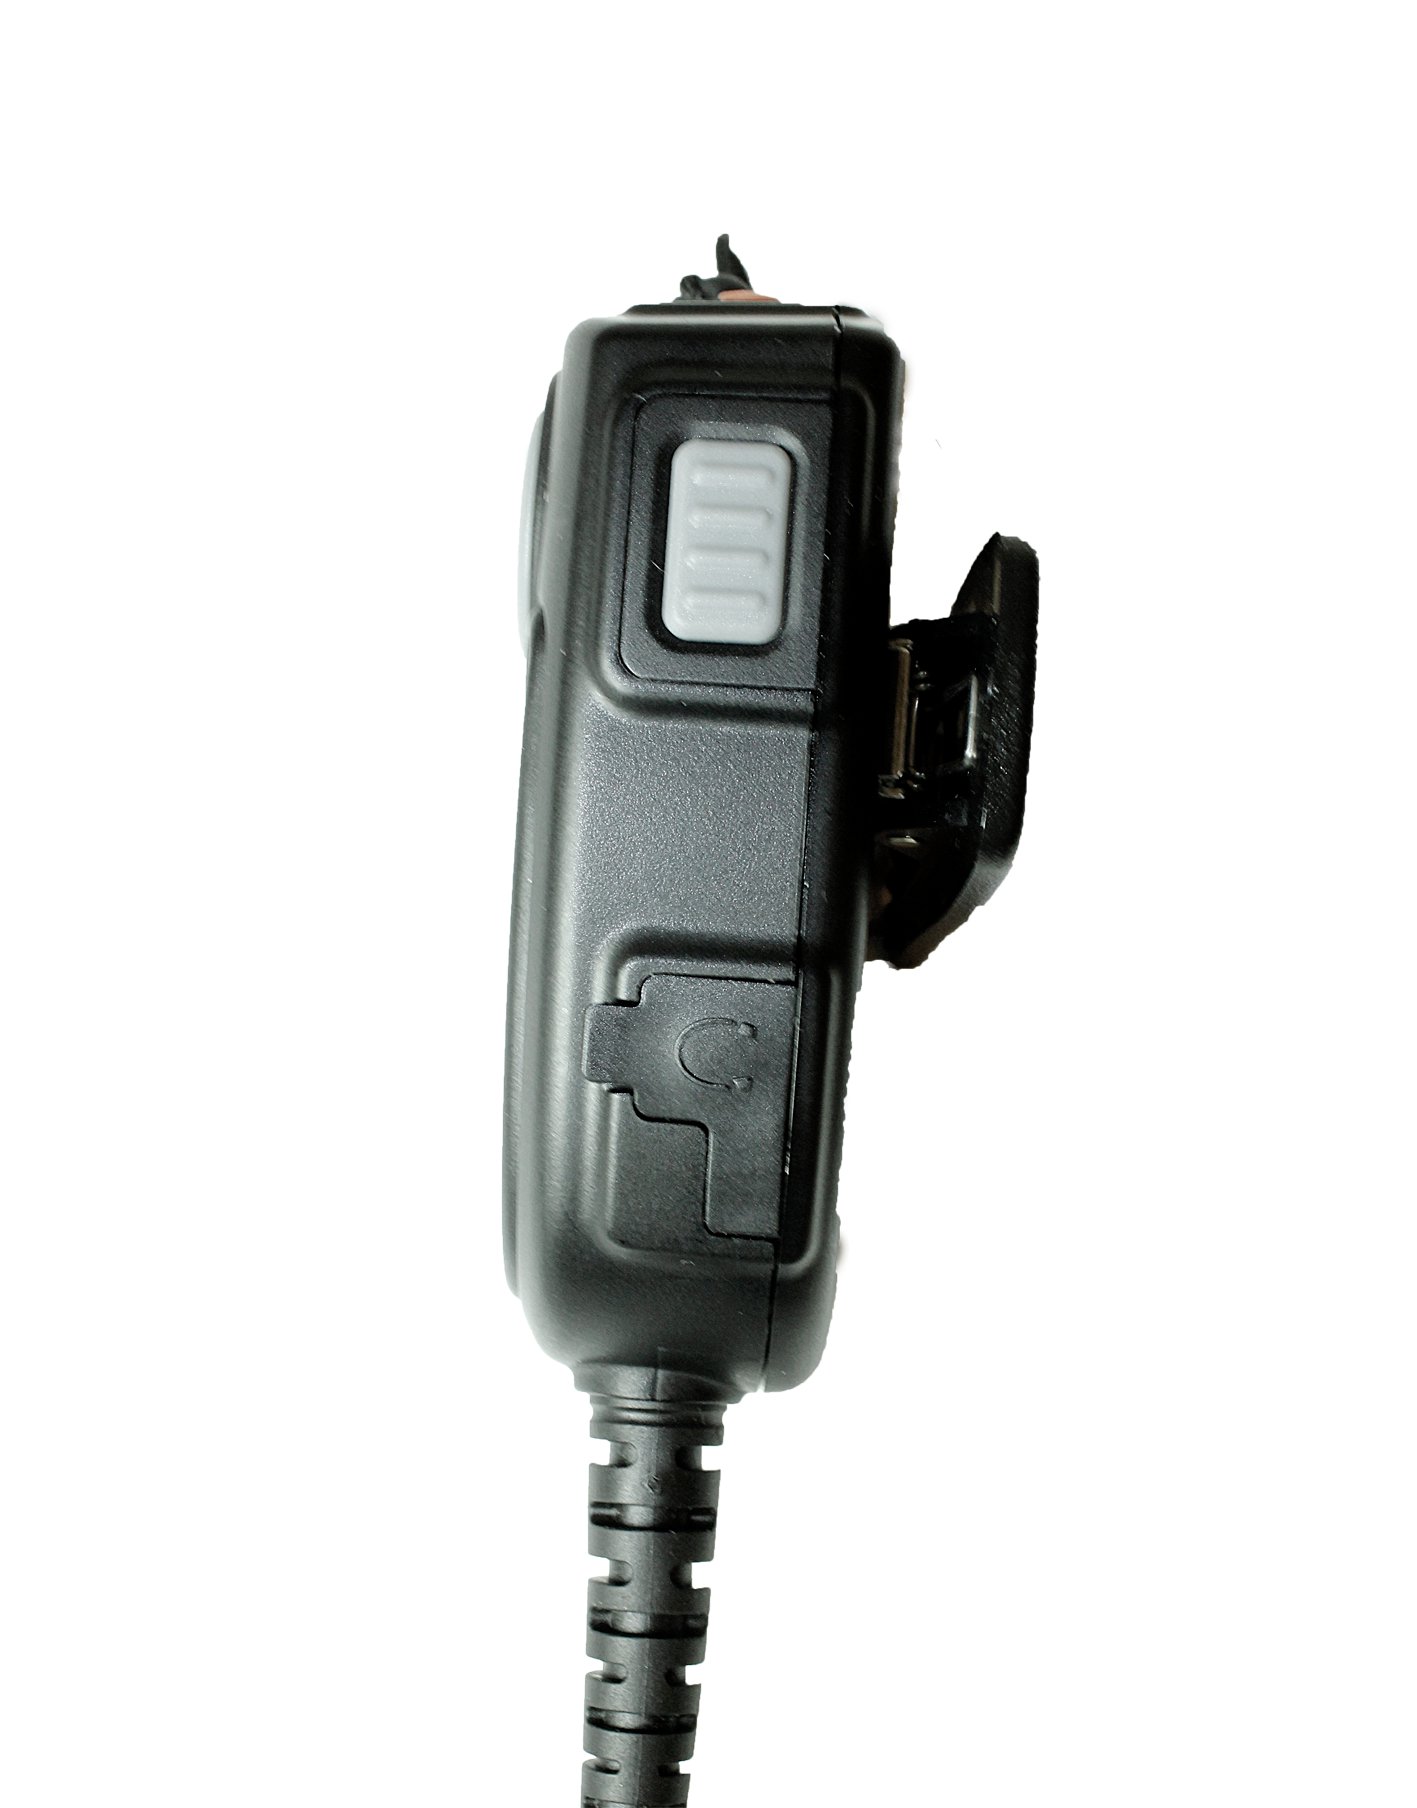 TITAN Lautsprechermikrofon MM20 mit Nexus 01 passend für Motorola MXP600, R7, R7A